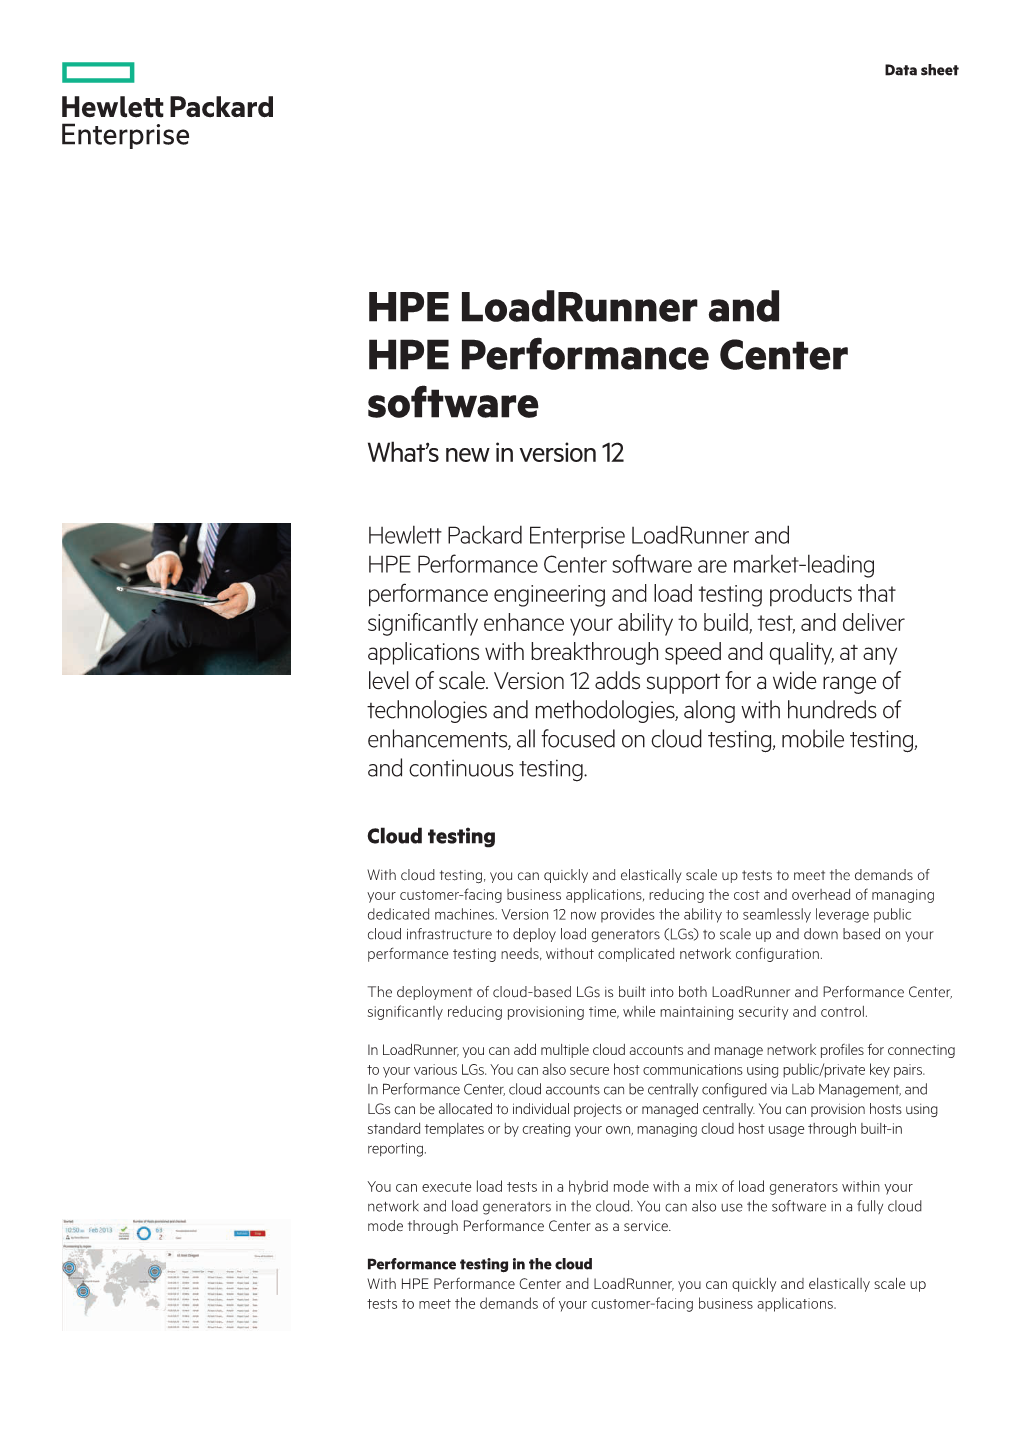 HPE Loadrunner and HPE Performance Center Software Data